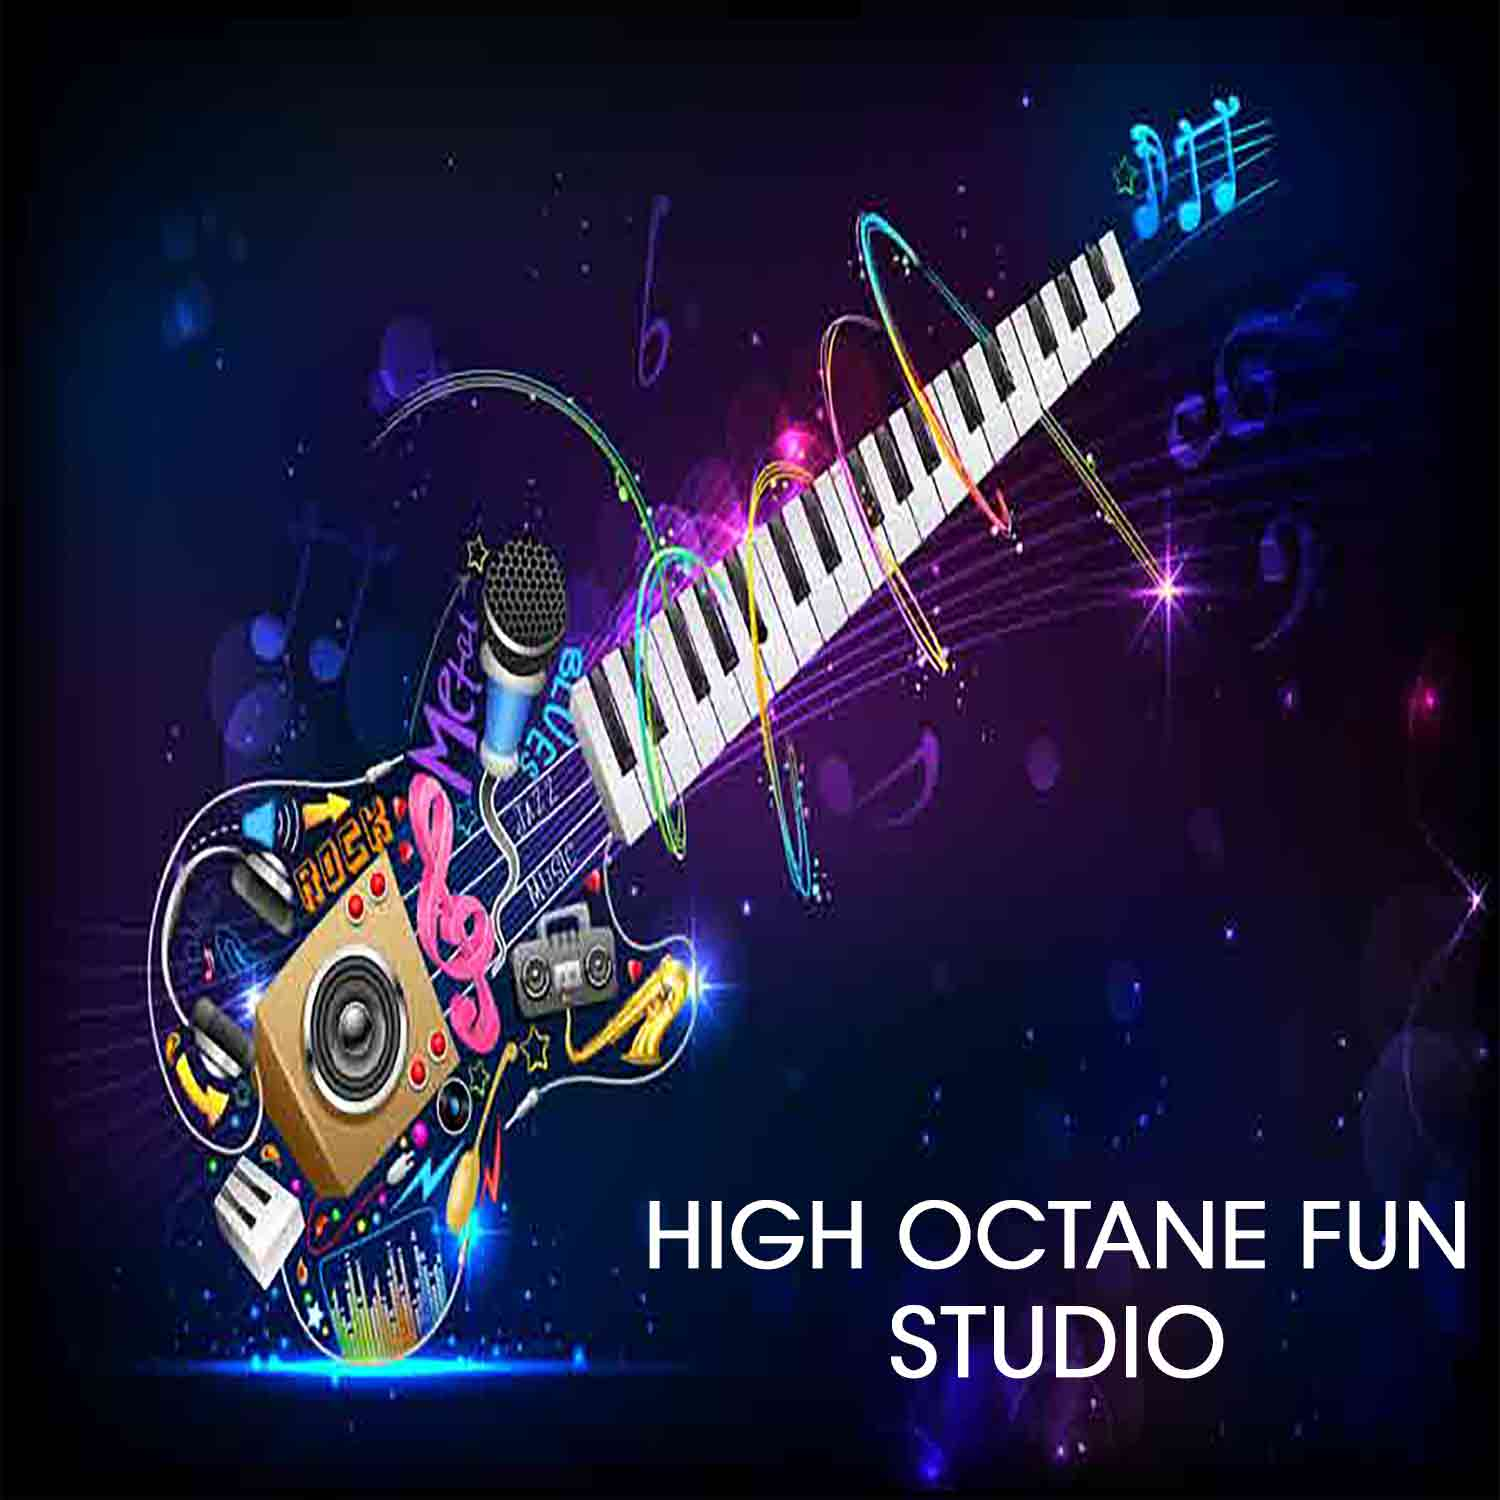 High Octane Fun Studio